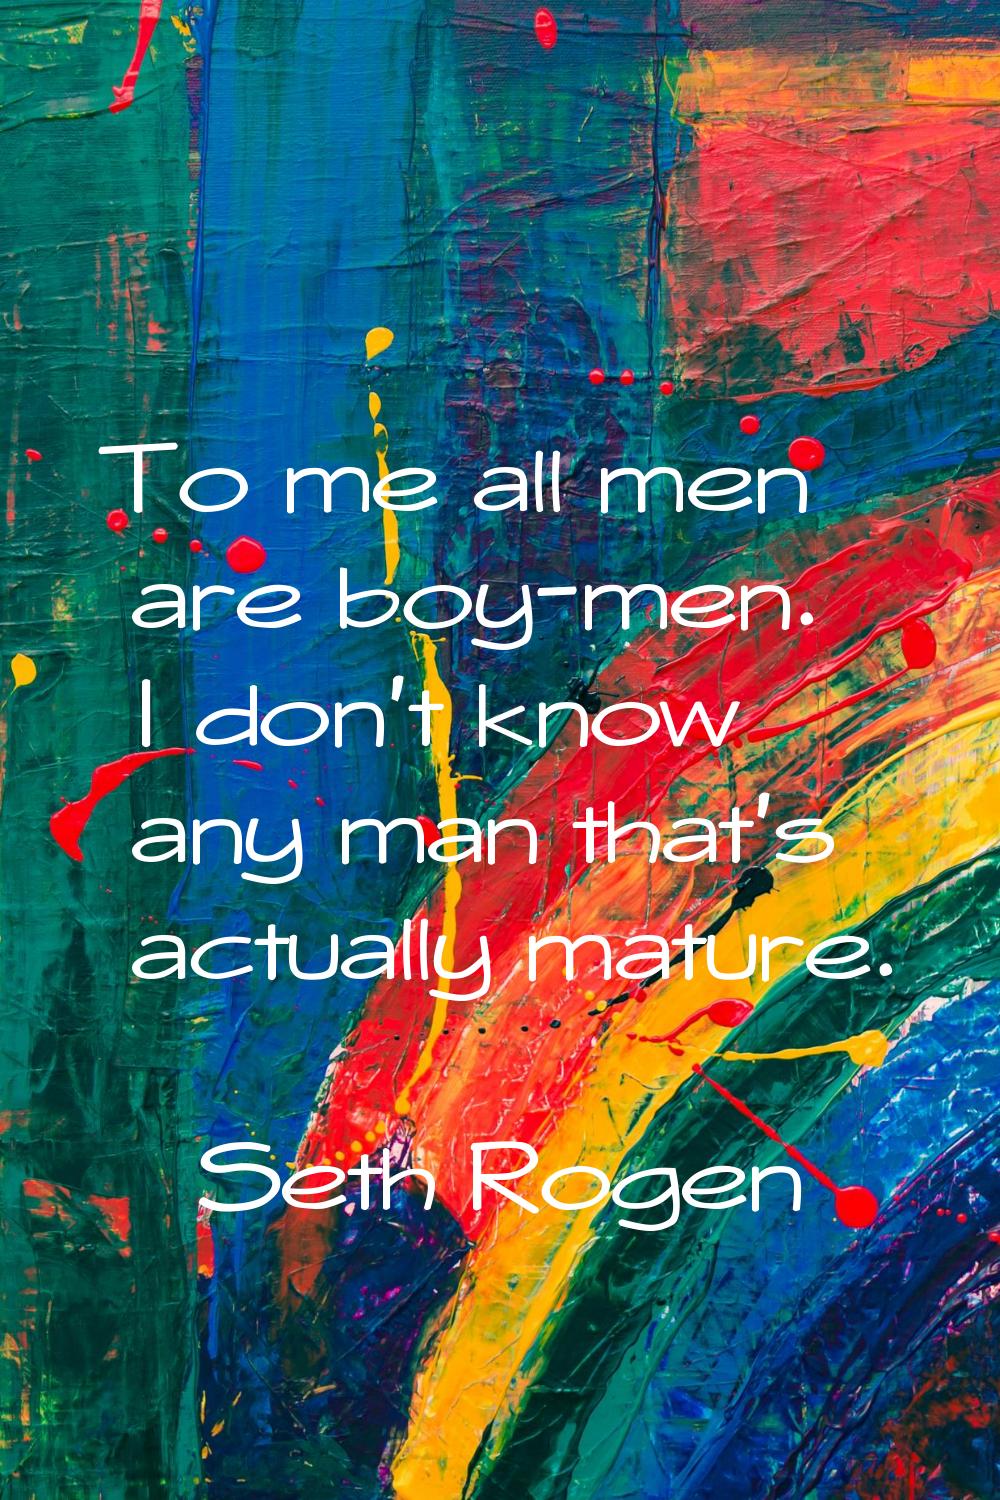 To me all men are boy-men. I don't know any man that's actually mature.